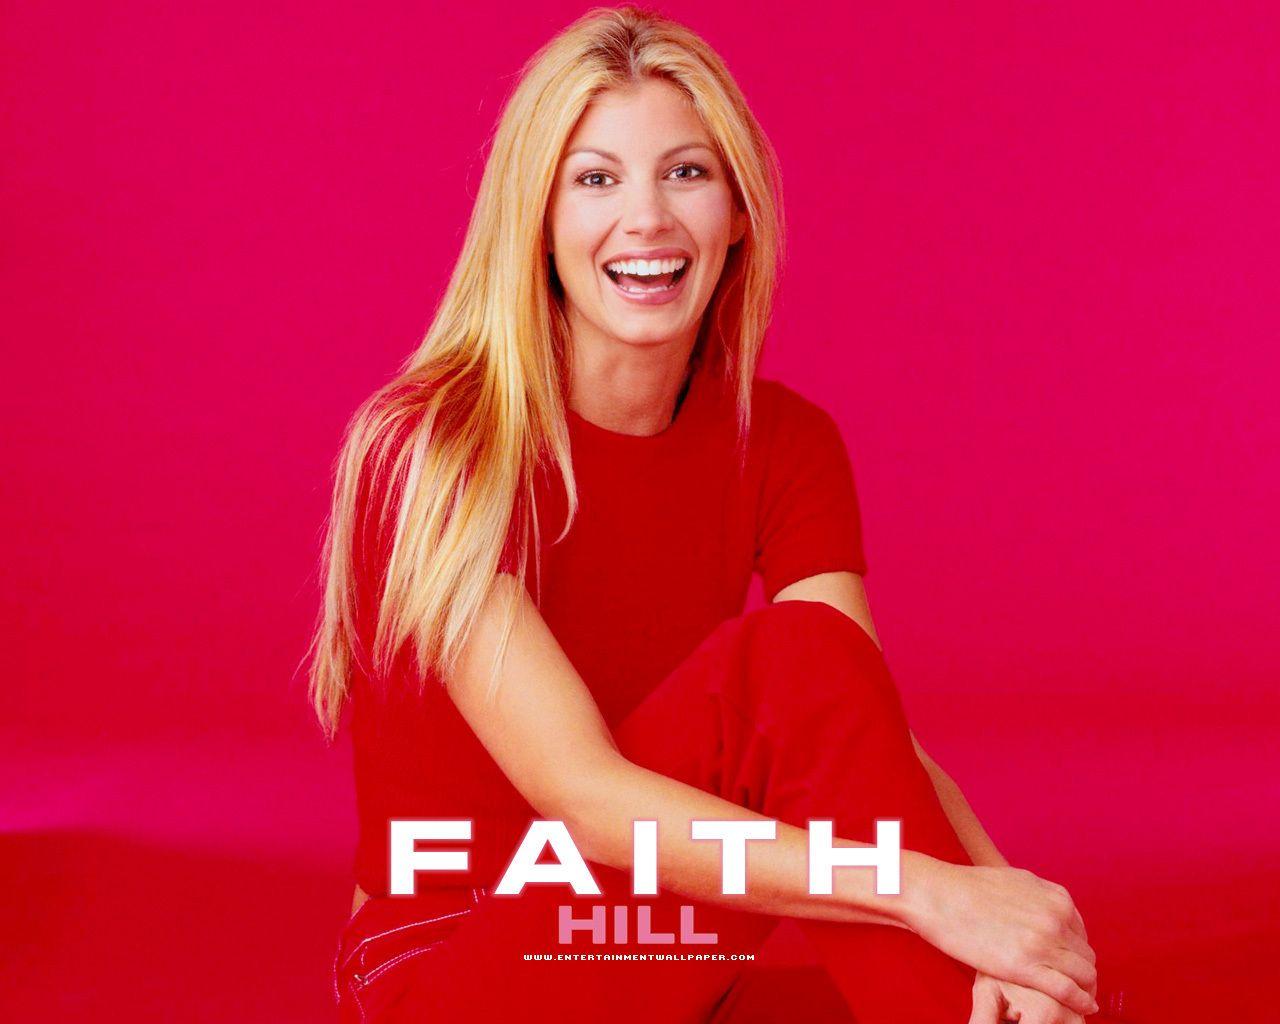 Faith Hill image -Faith♥ HD wallpaper and background photo